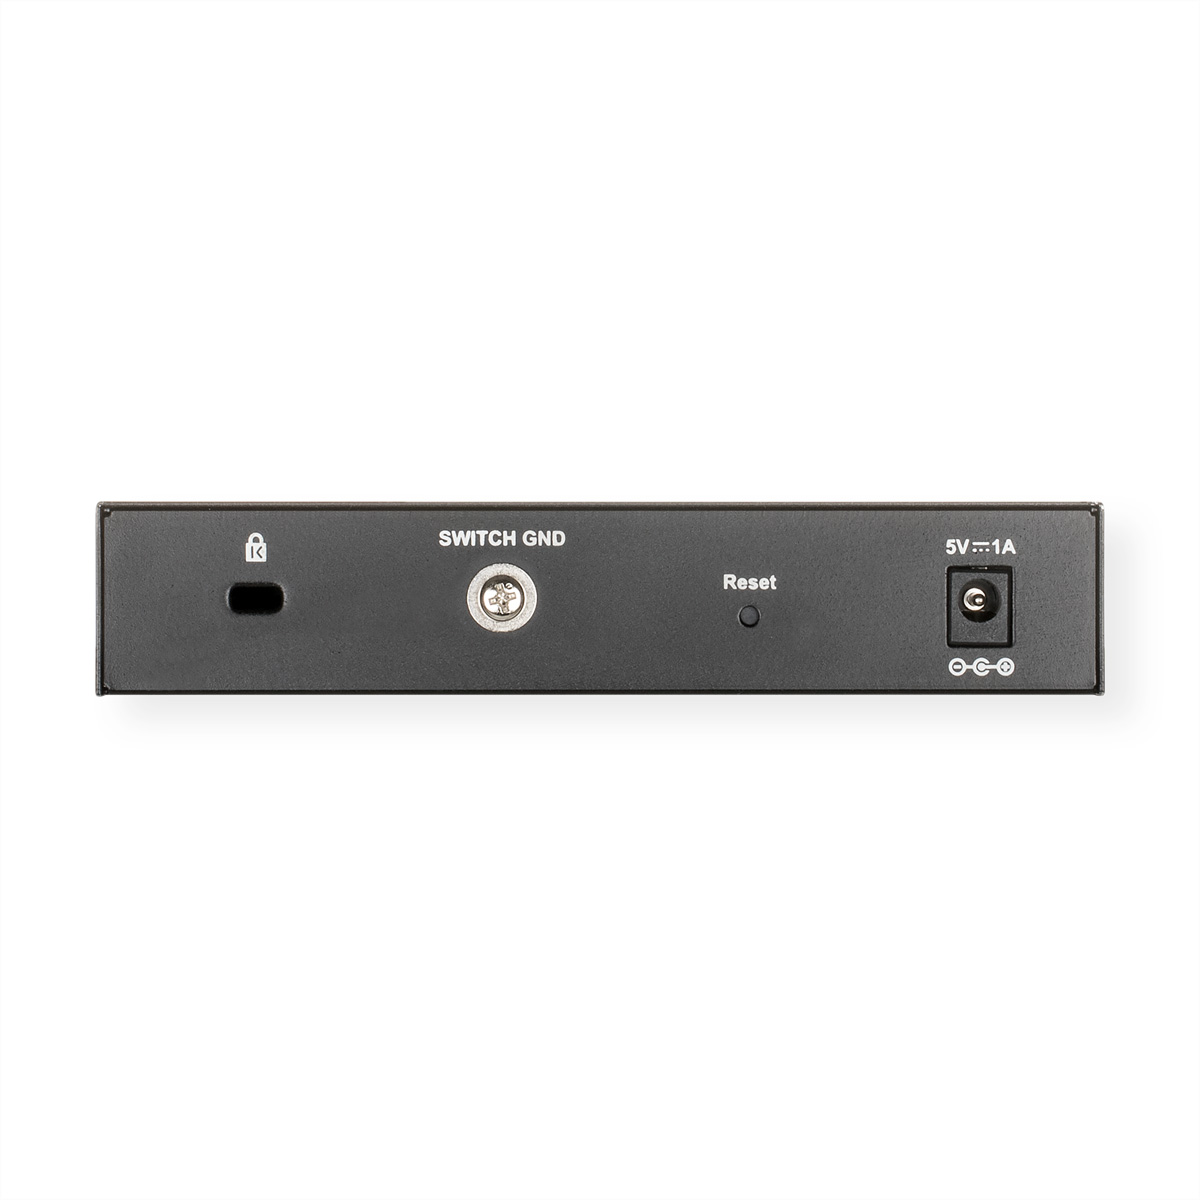 Gigabit Gigabit DGS-1100-08V2/E Ethernet Managed Switch Smart D-LINK Switch